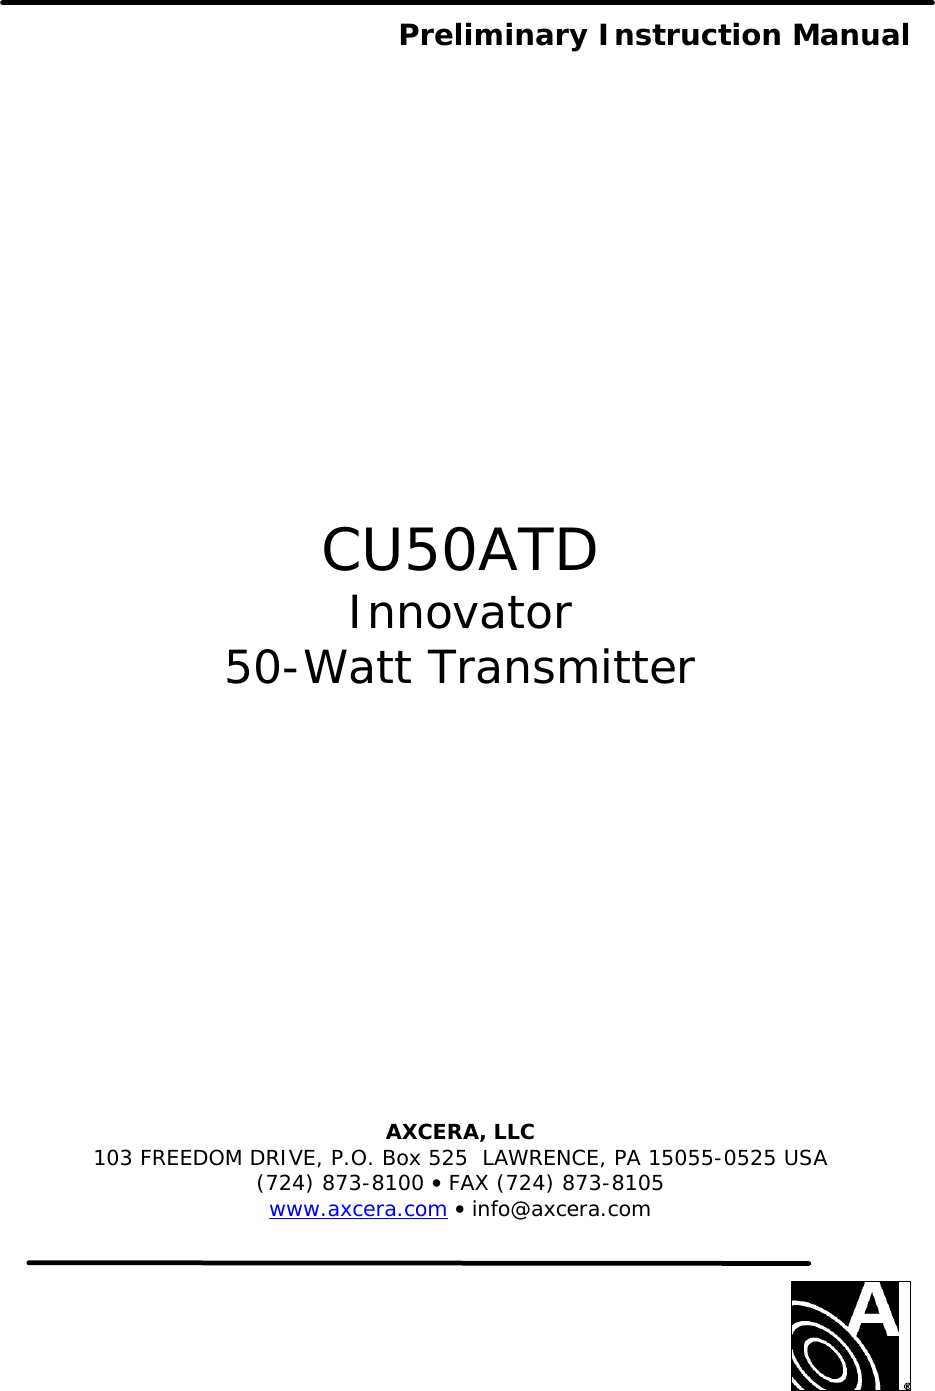  Preliminary Instruction Manual                 CU50ATD Innovator 50-Watt Transmitter               AXCERA, LLC  103 FREEDOM DRIVE, P.O. Box 525  LAWRENCE, PA 15055-0525 USA (724) 873-8100 • FAX (724) 873-8105 www.axcera.com • info@axcera.com     